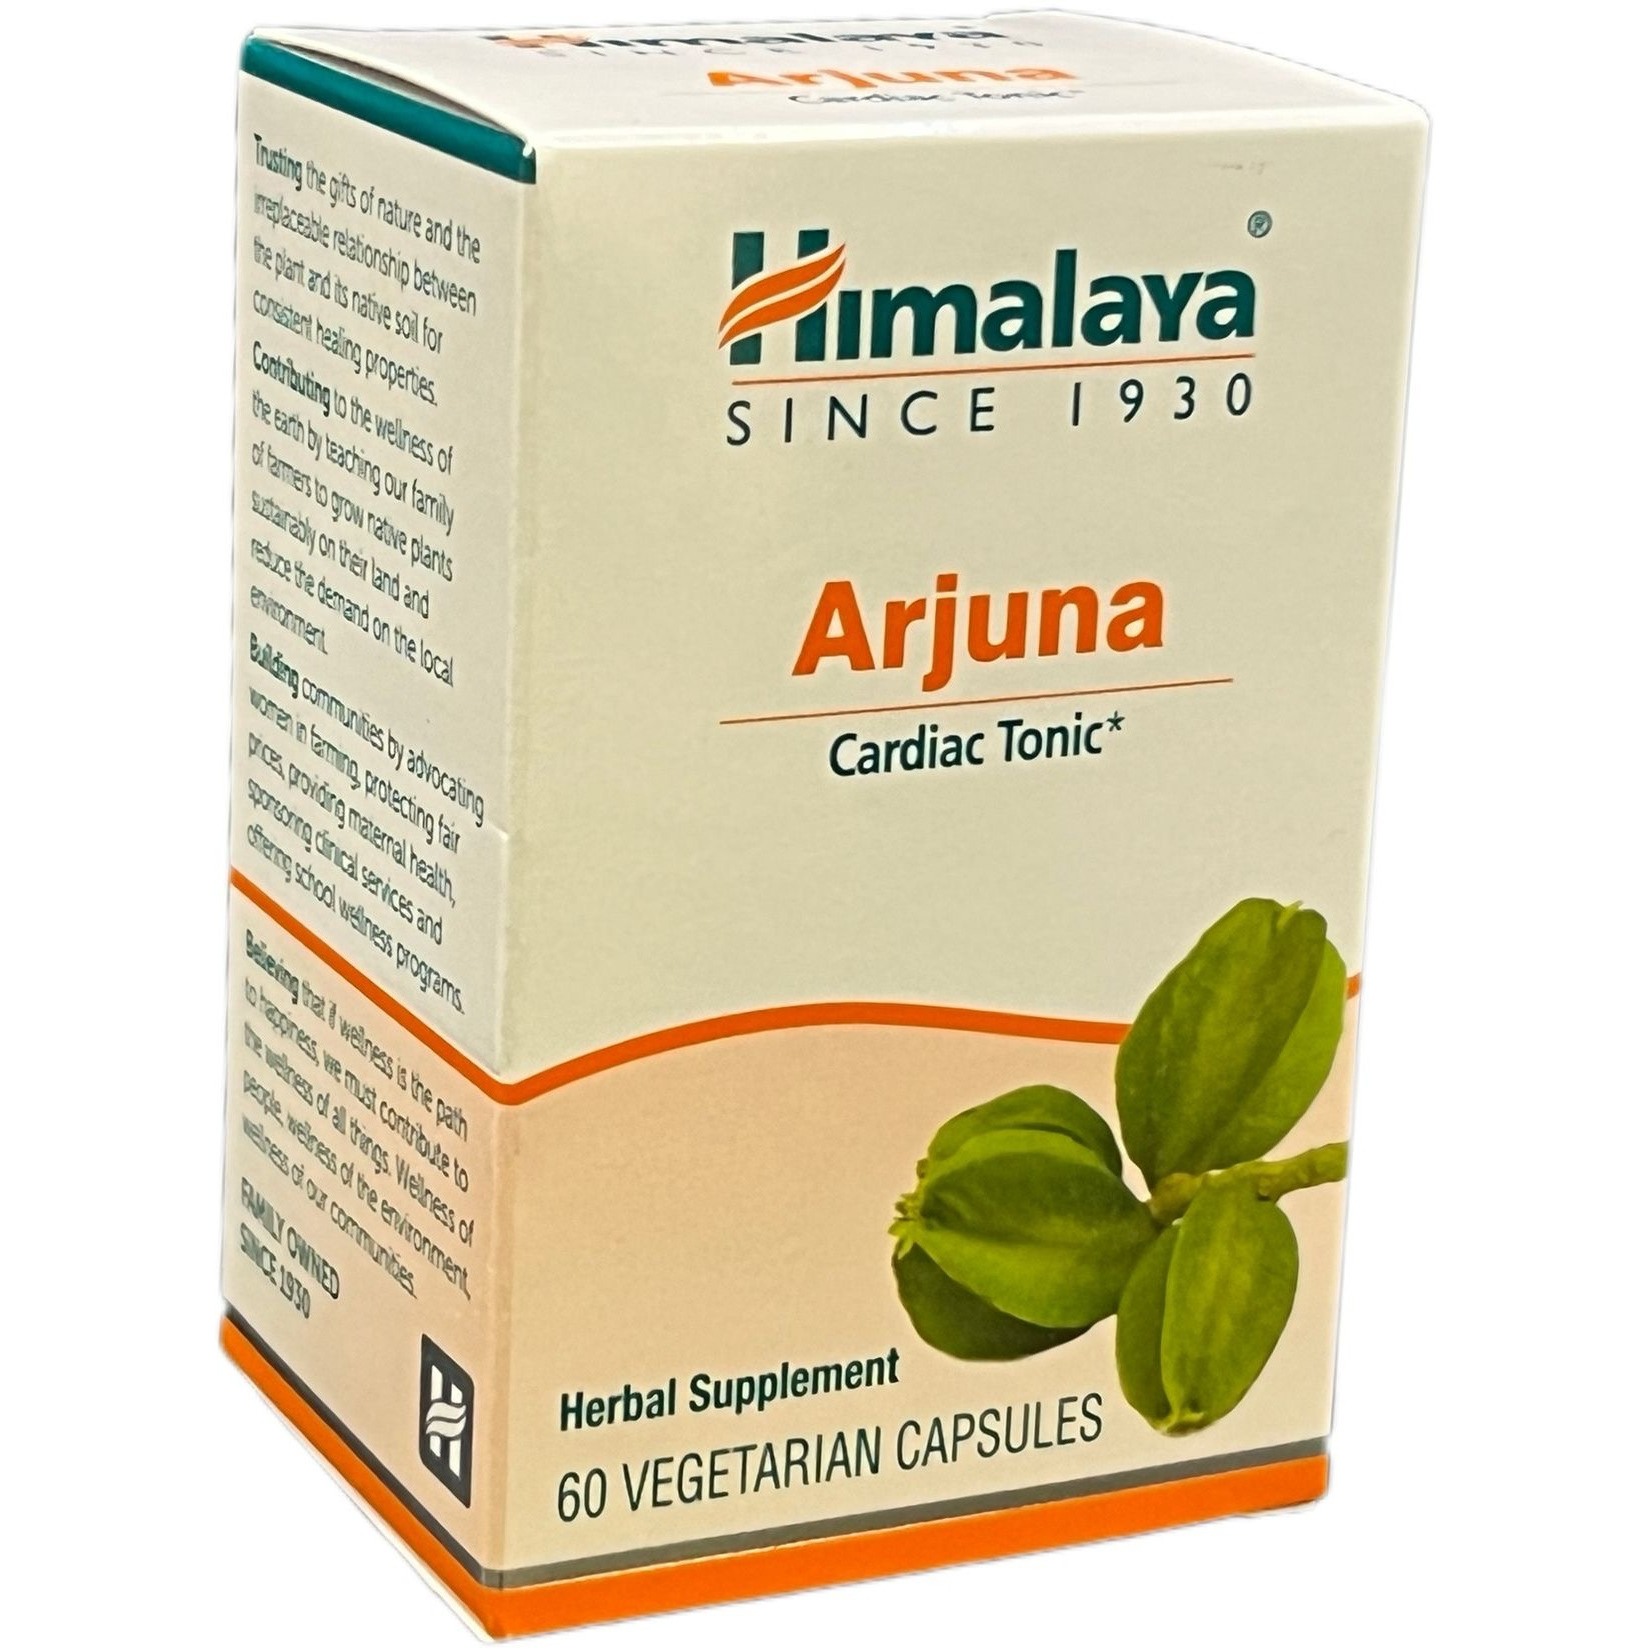 Case of 10 - Himalaya Arjuna Cardiac Tonic Herbal Supplement - 60 Capsules